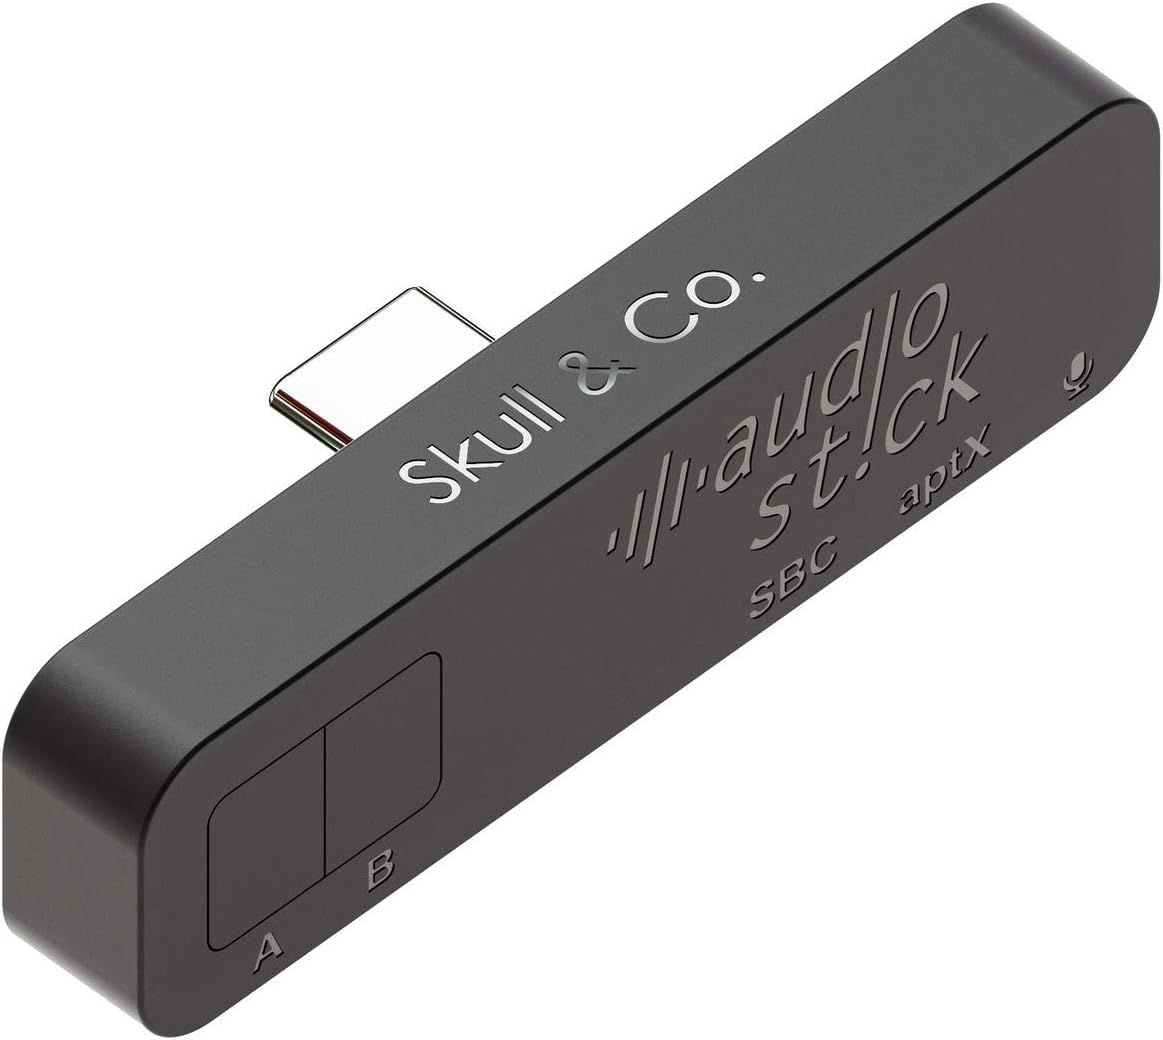 dongle USB Skull & Co. AudioStick